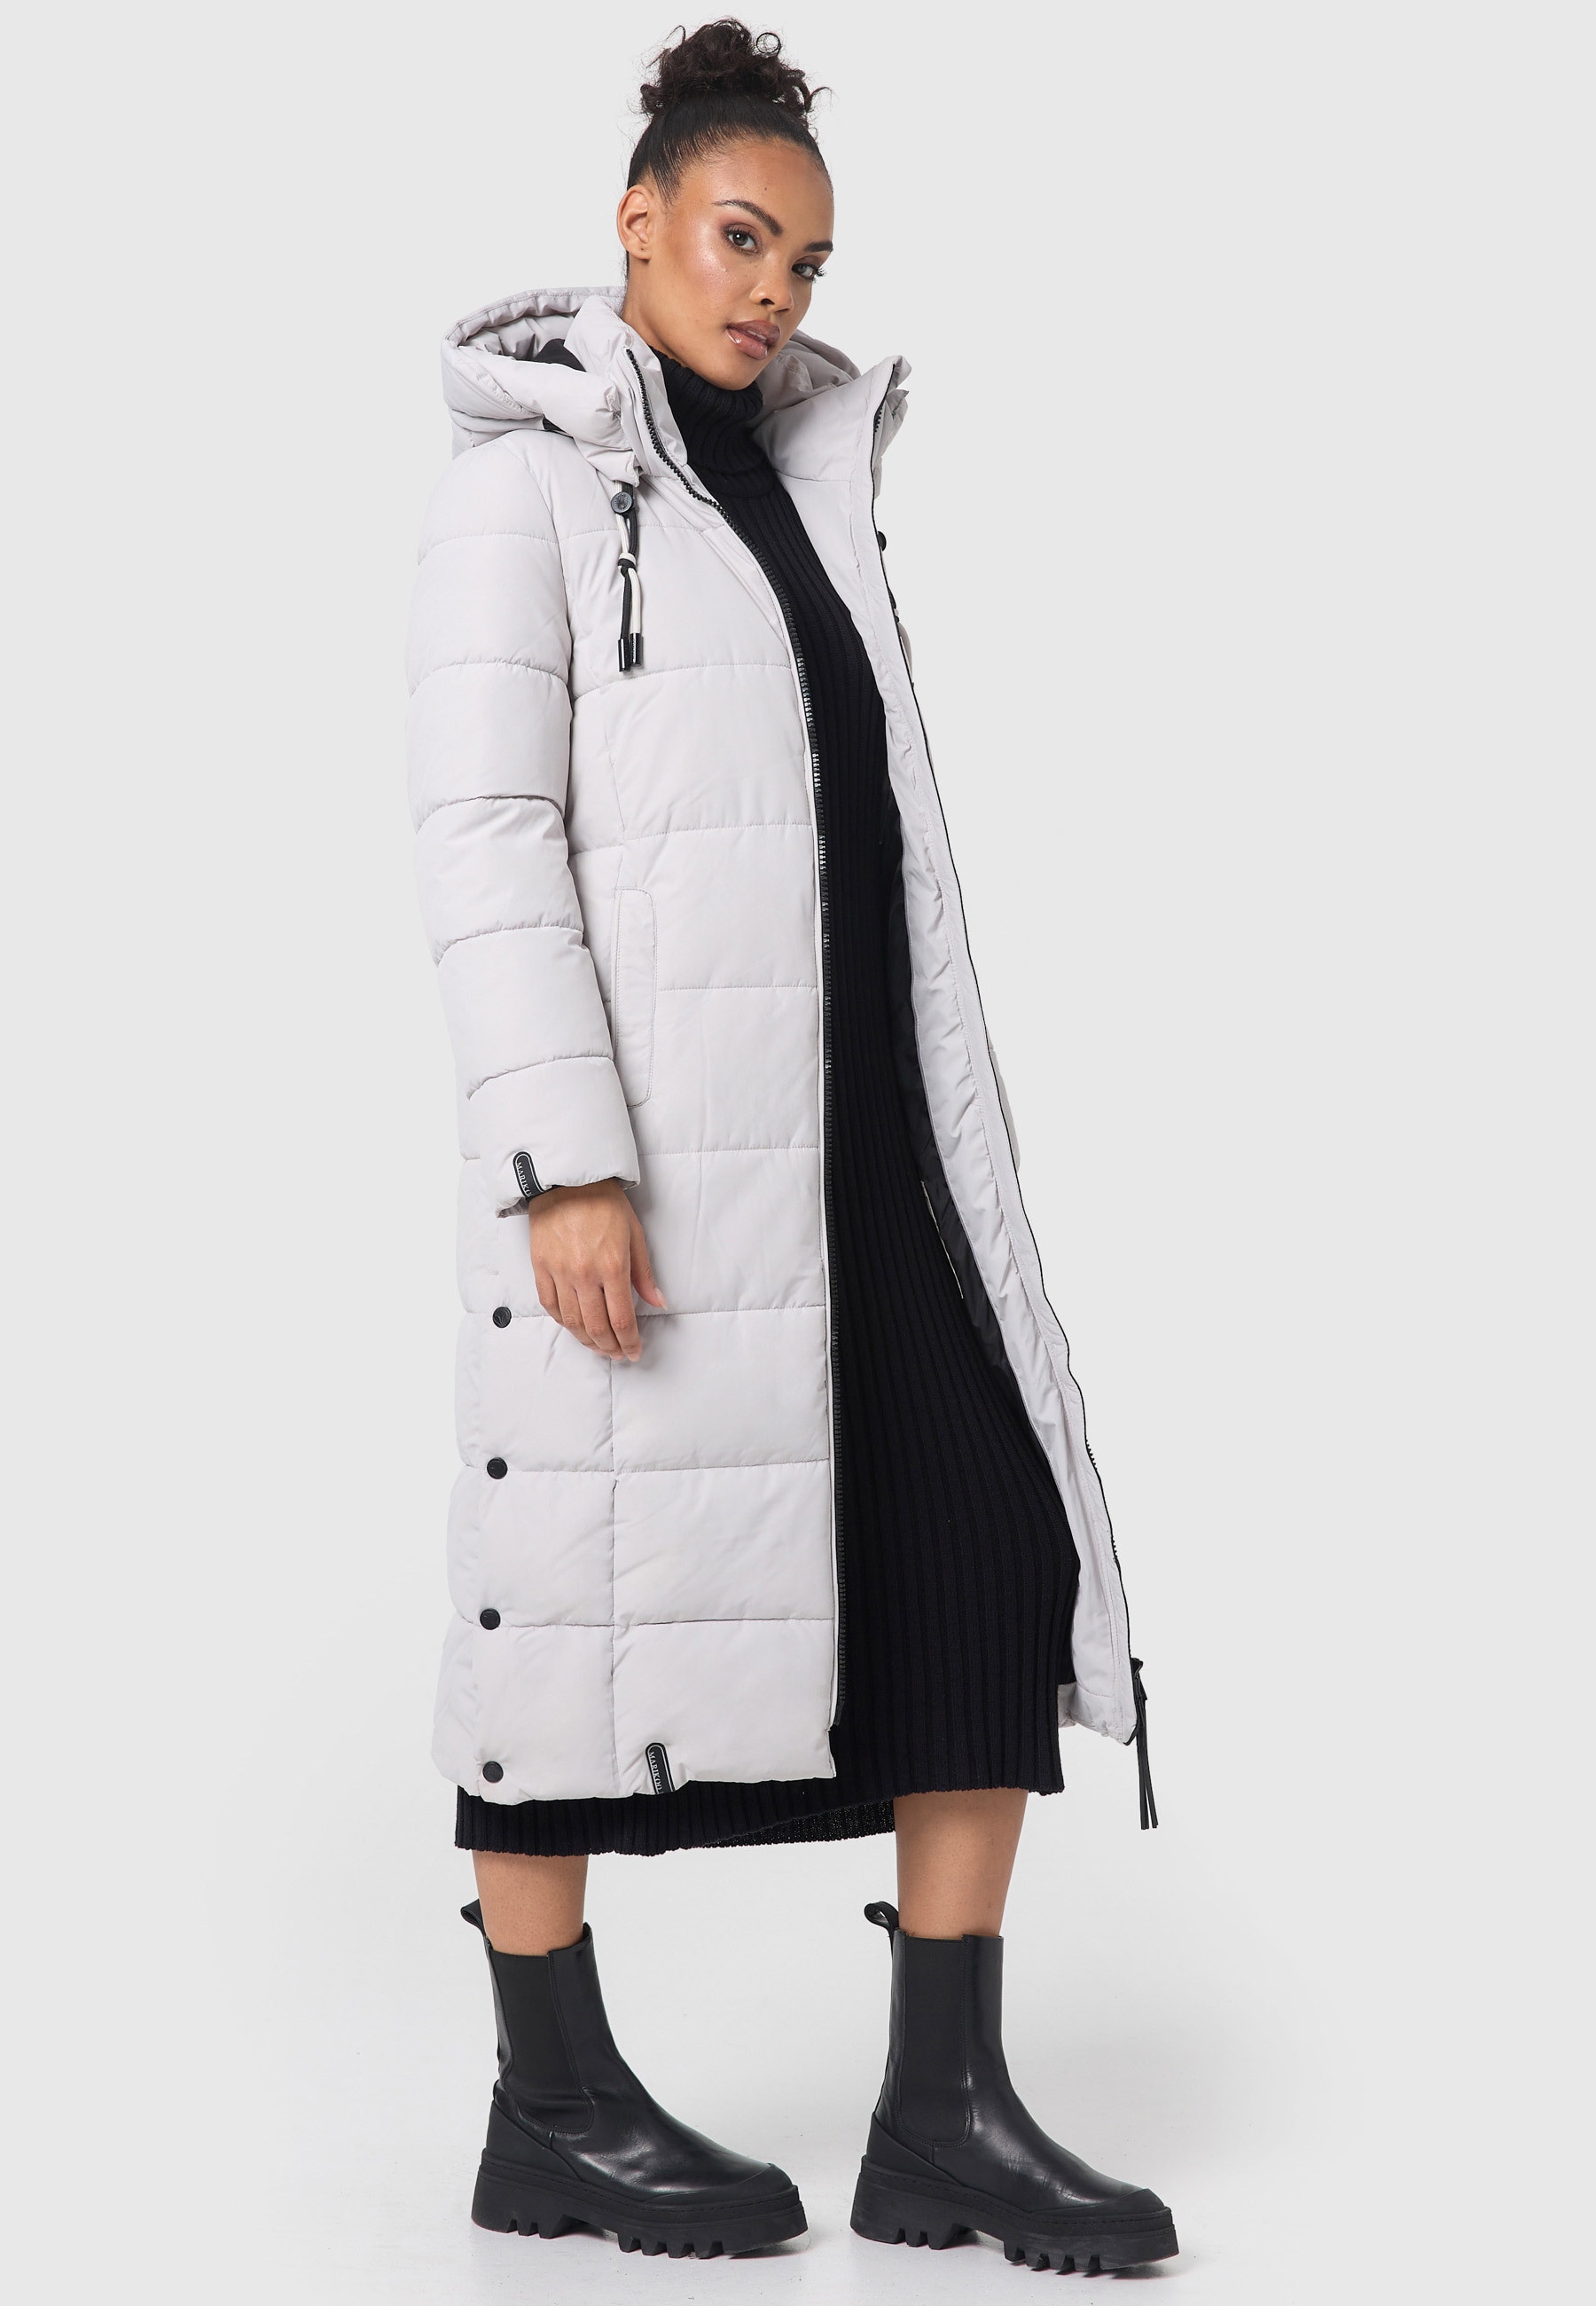 »Nadeshikoo | Winter Winterjacke BAUR langer Mantel Marikoo für extra gesteppt kaufen XIV«,